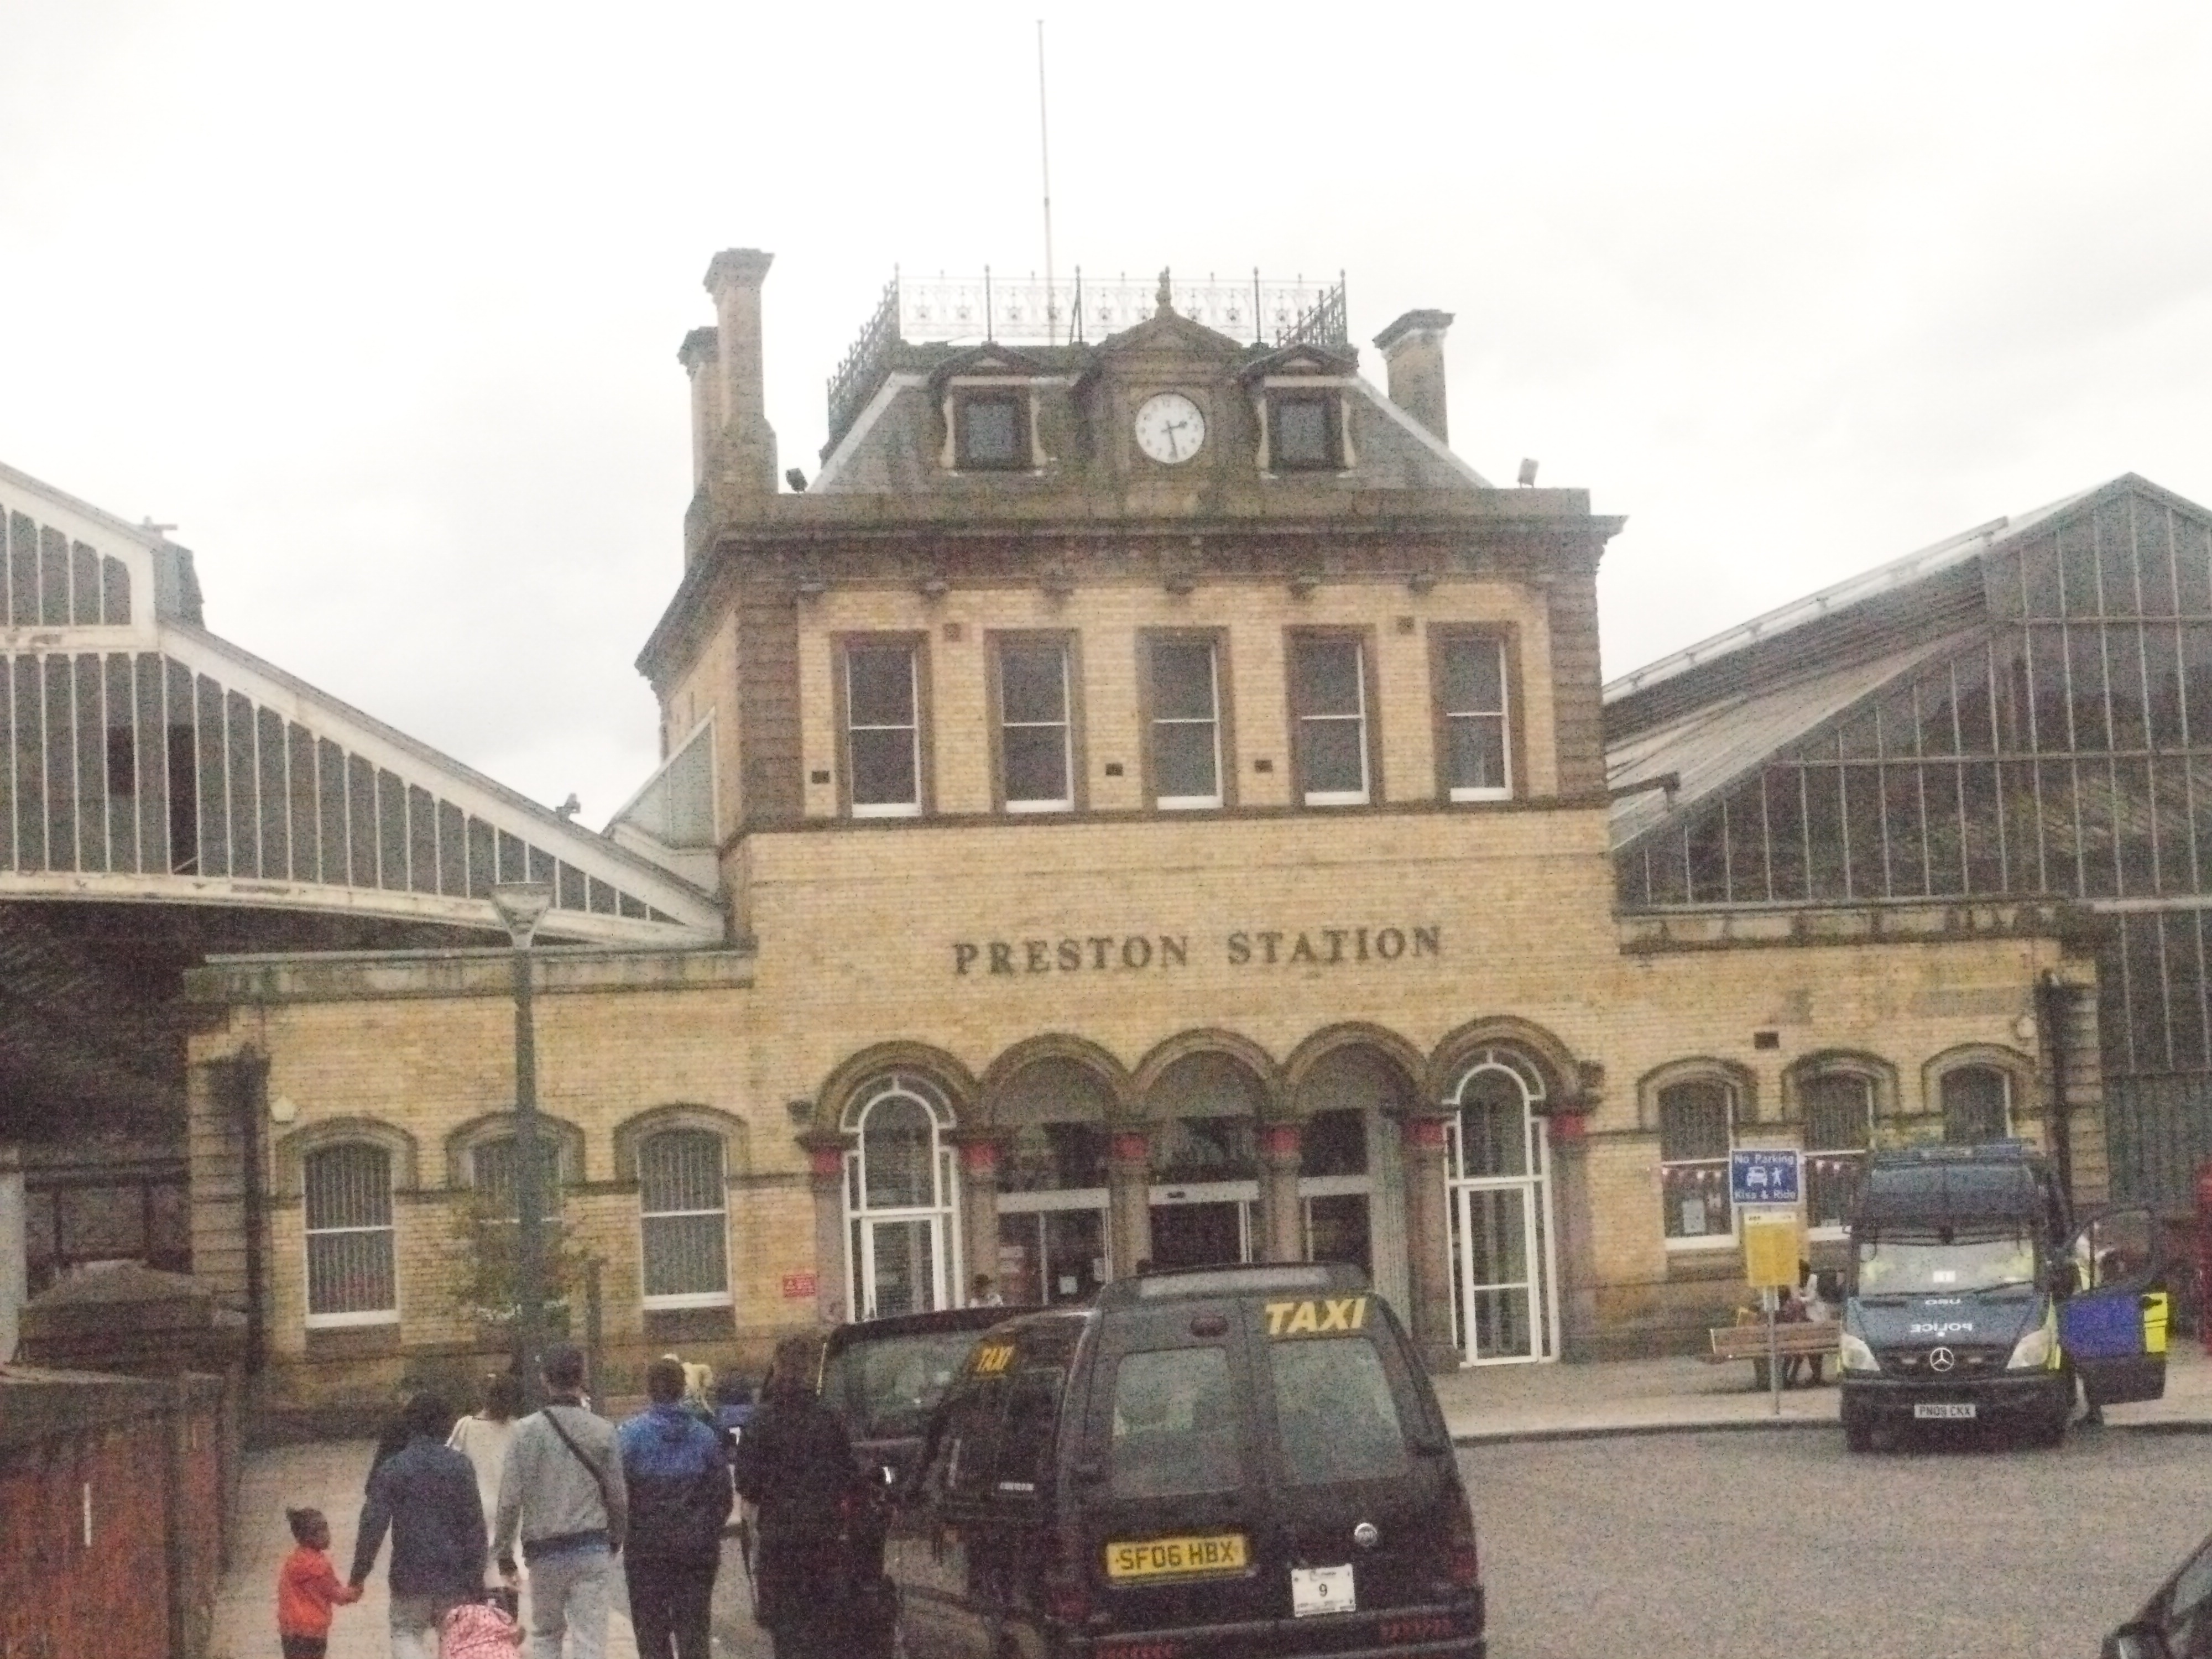 Photo taken by me - Preston railway station